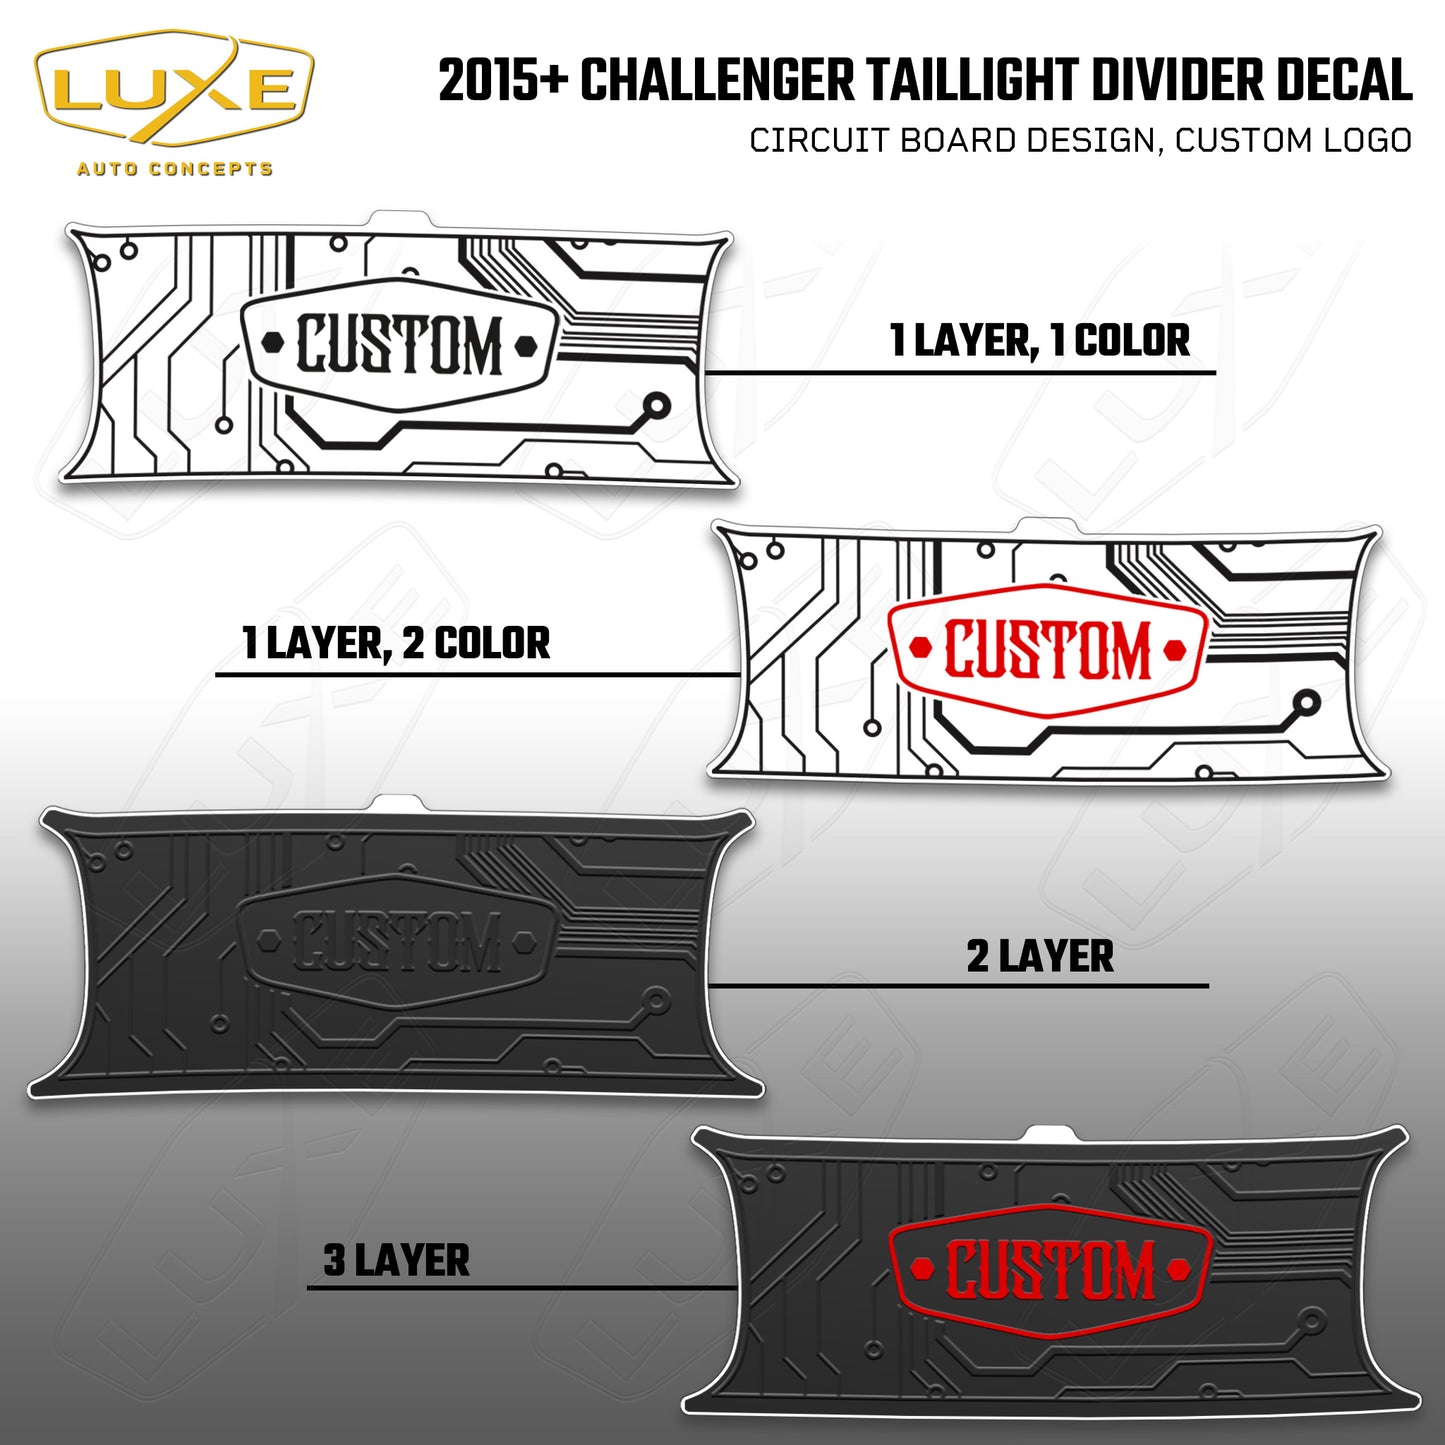 2015+ Challenger Taillight Center Divider Decal - Circuit Board Design, Custom Logo